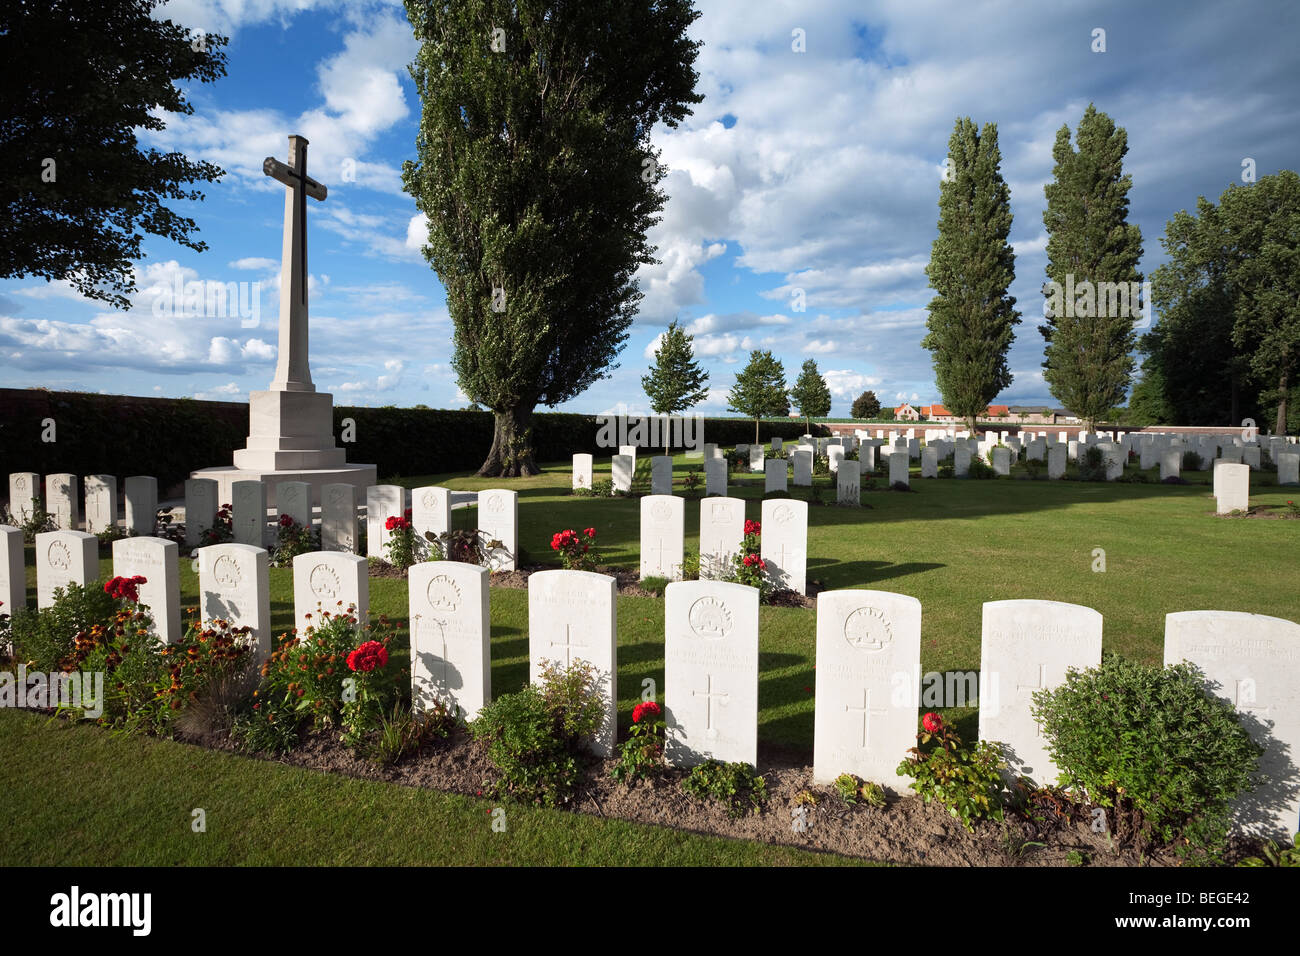 Primera Guerra Mundial Cementerio Militar Británico con álamos. Foto de stock